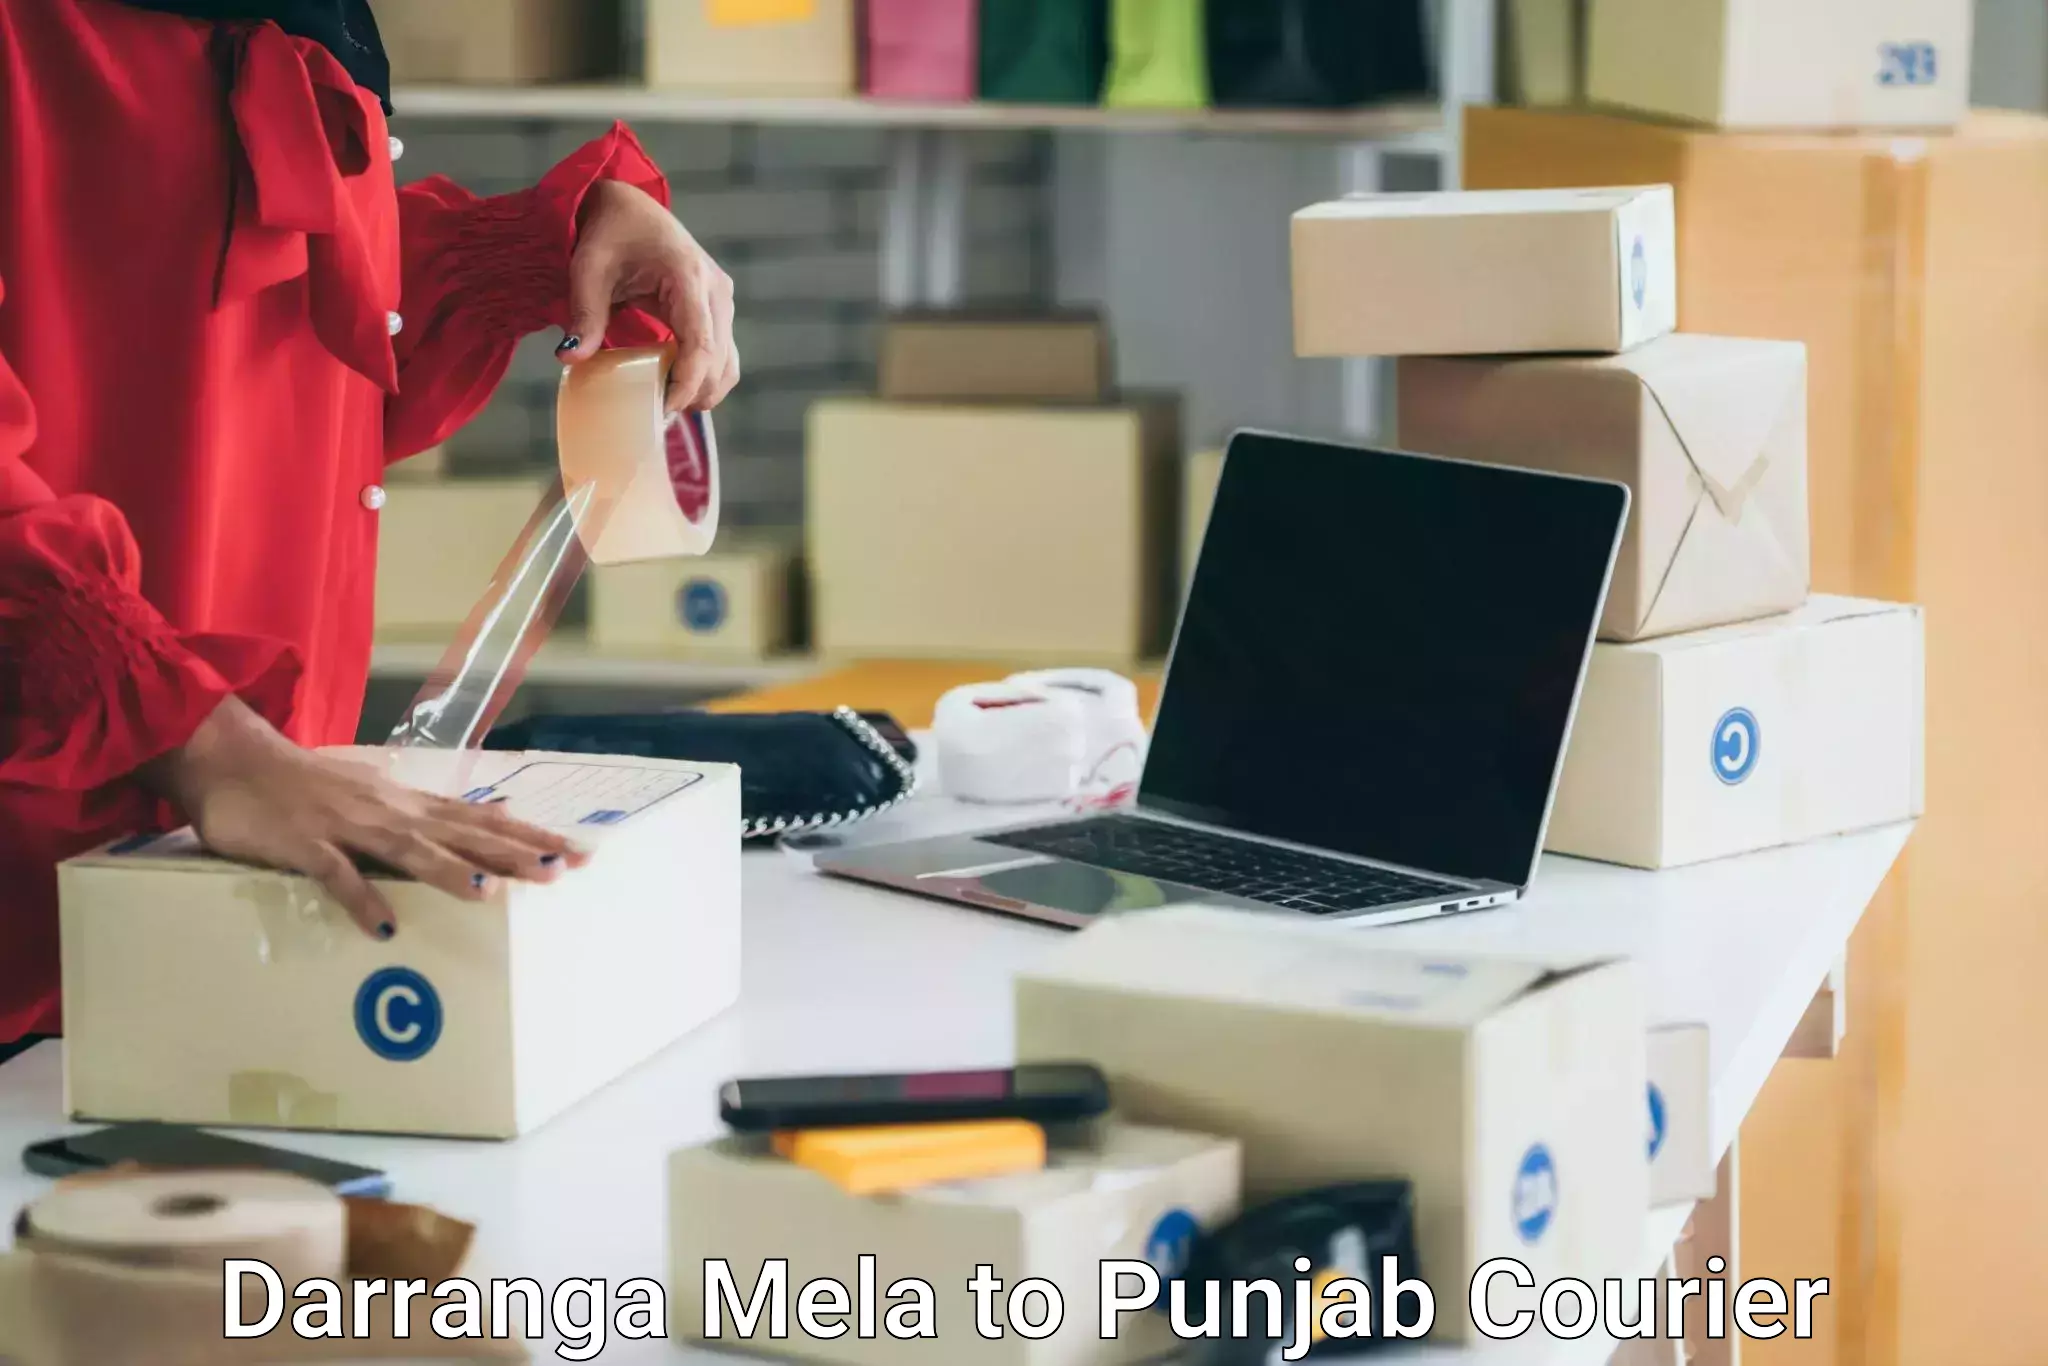 Personalized moving and storage Darranga Mela to Punjab